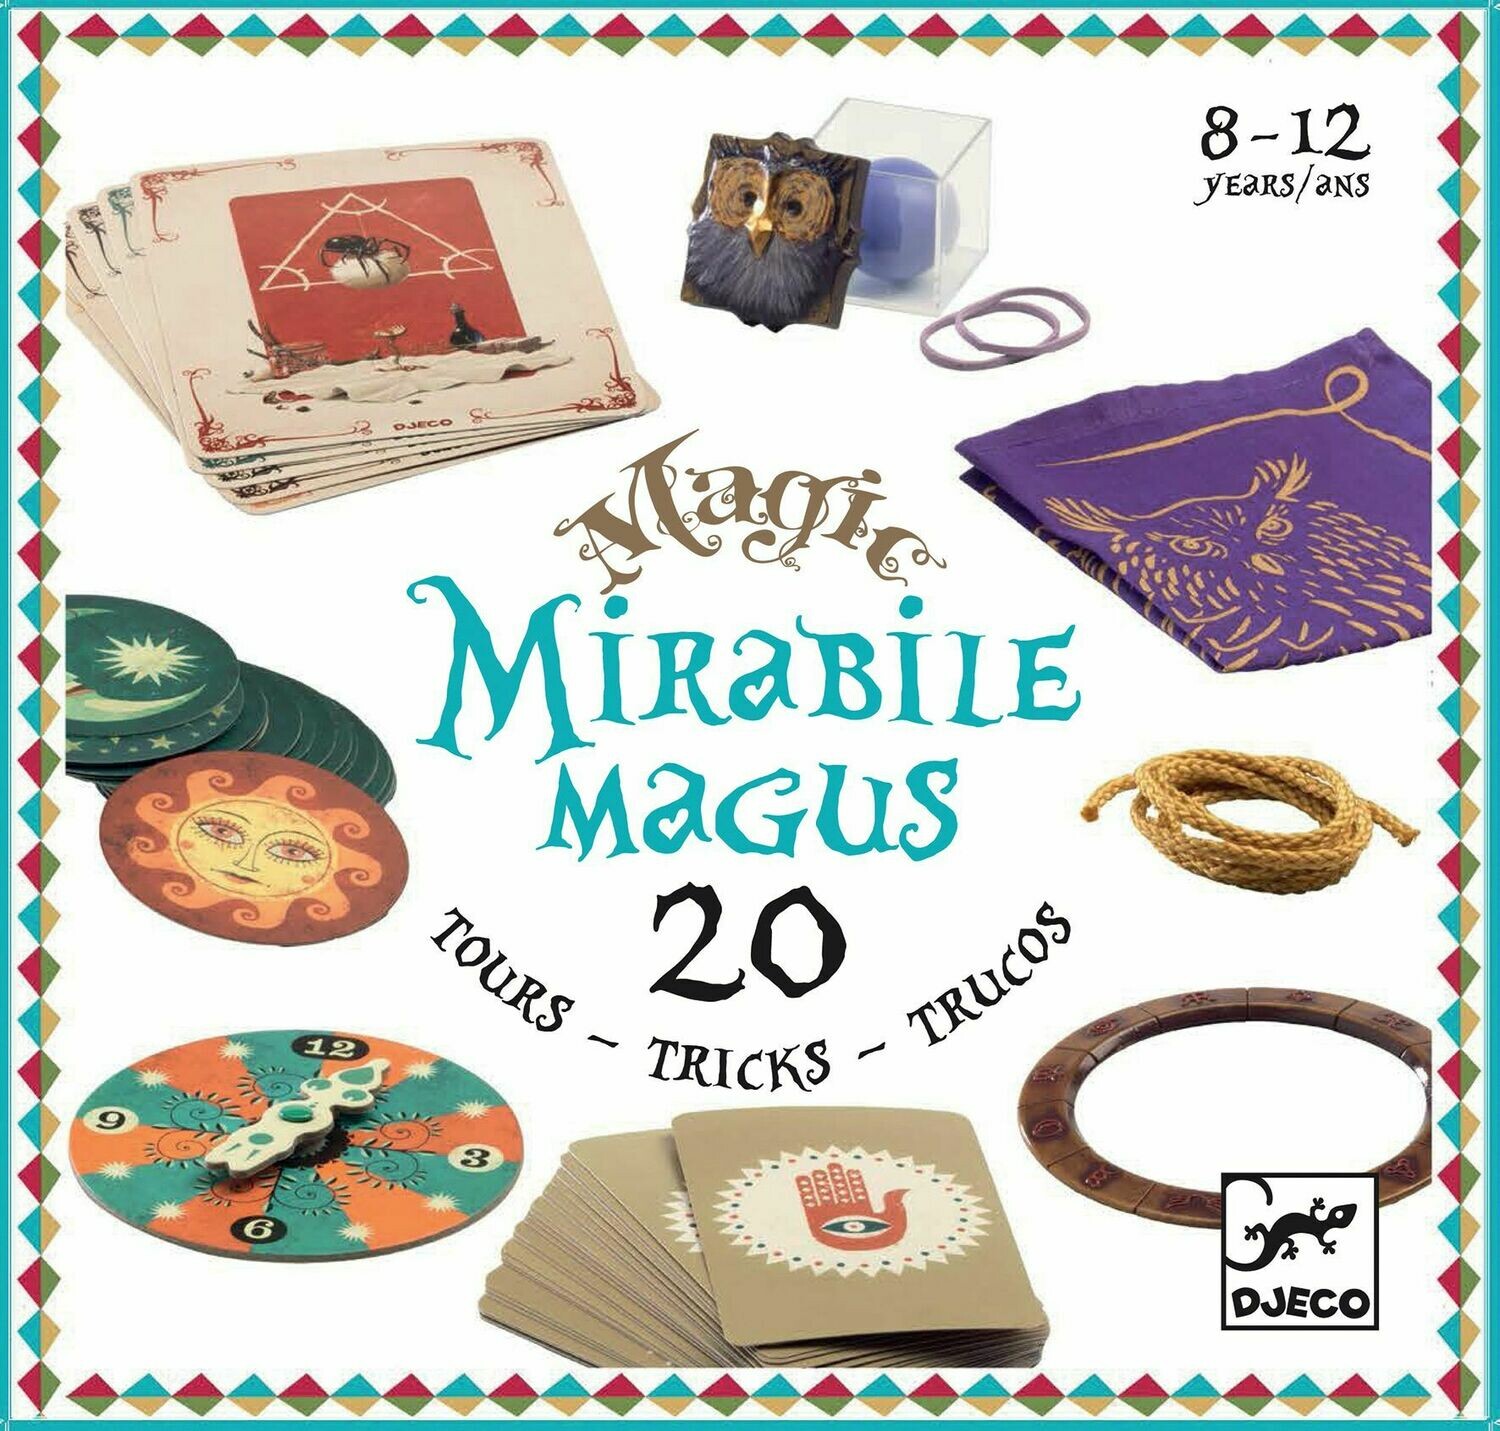 MAGIC MIRABILE MAGUS - 20 TOURS DE MAGIE